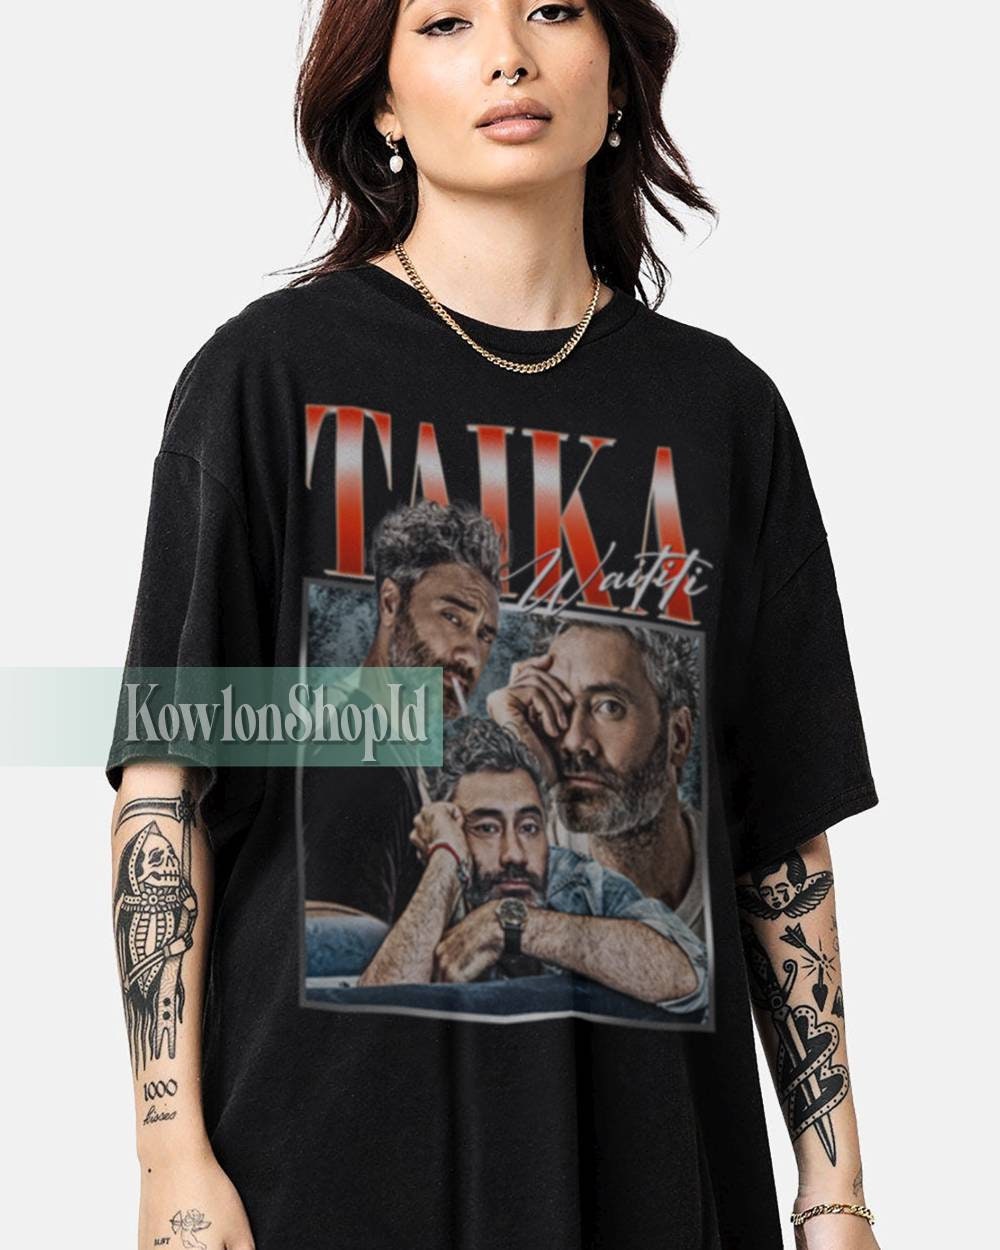 Discover RETRO TAIKA WAITITI Shirt, Taika Fans Tees, Overaize Style Tshirt